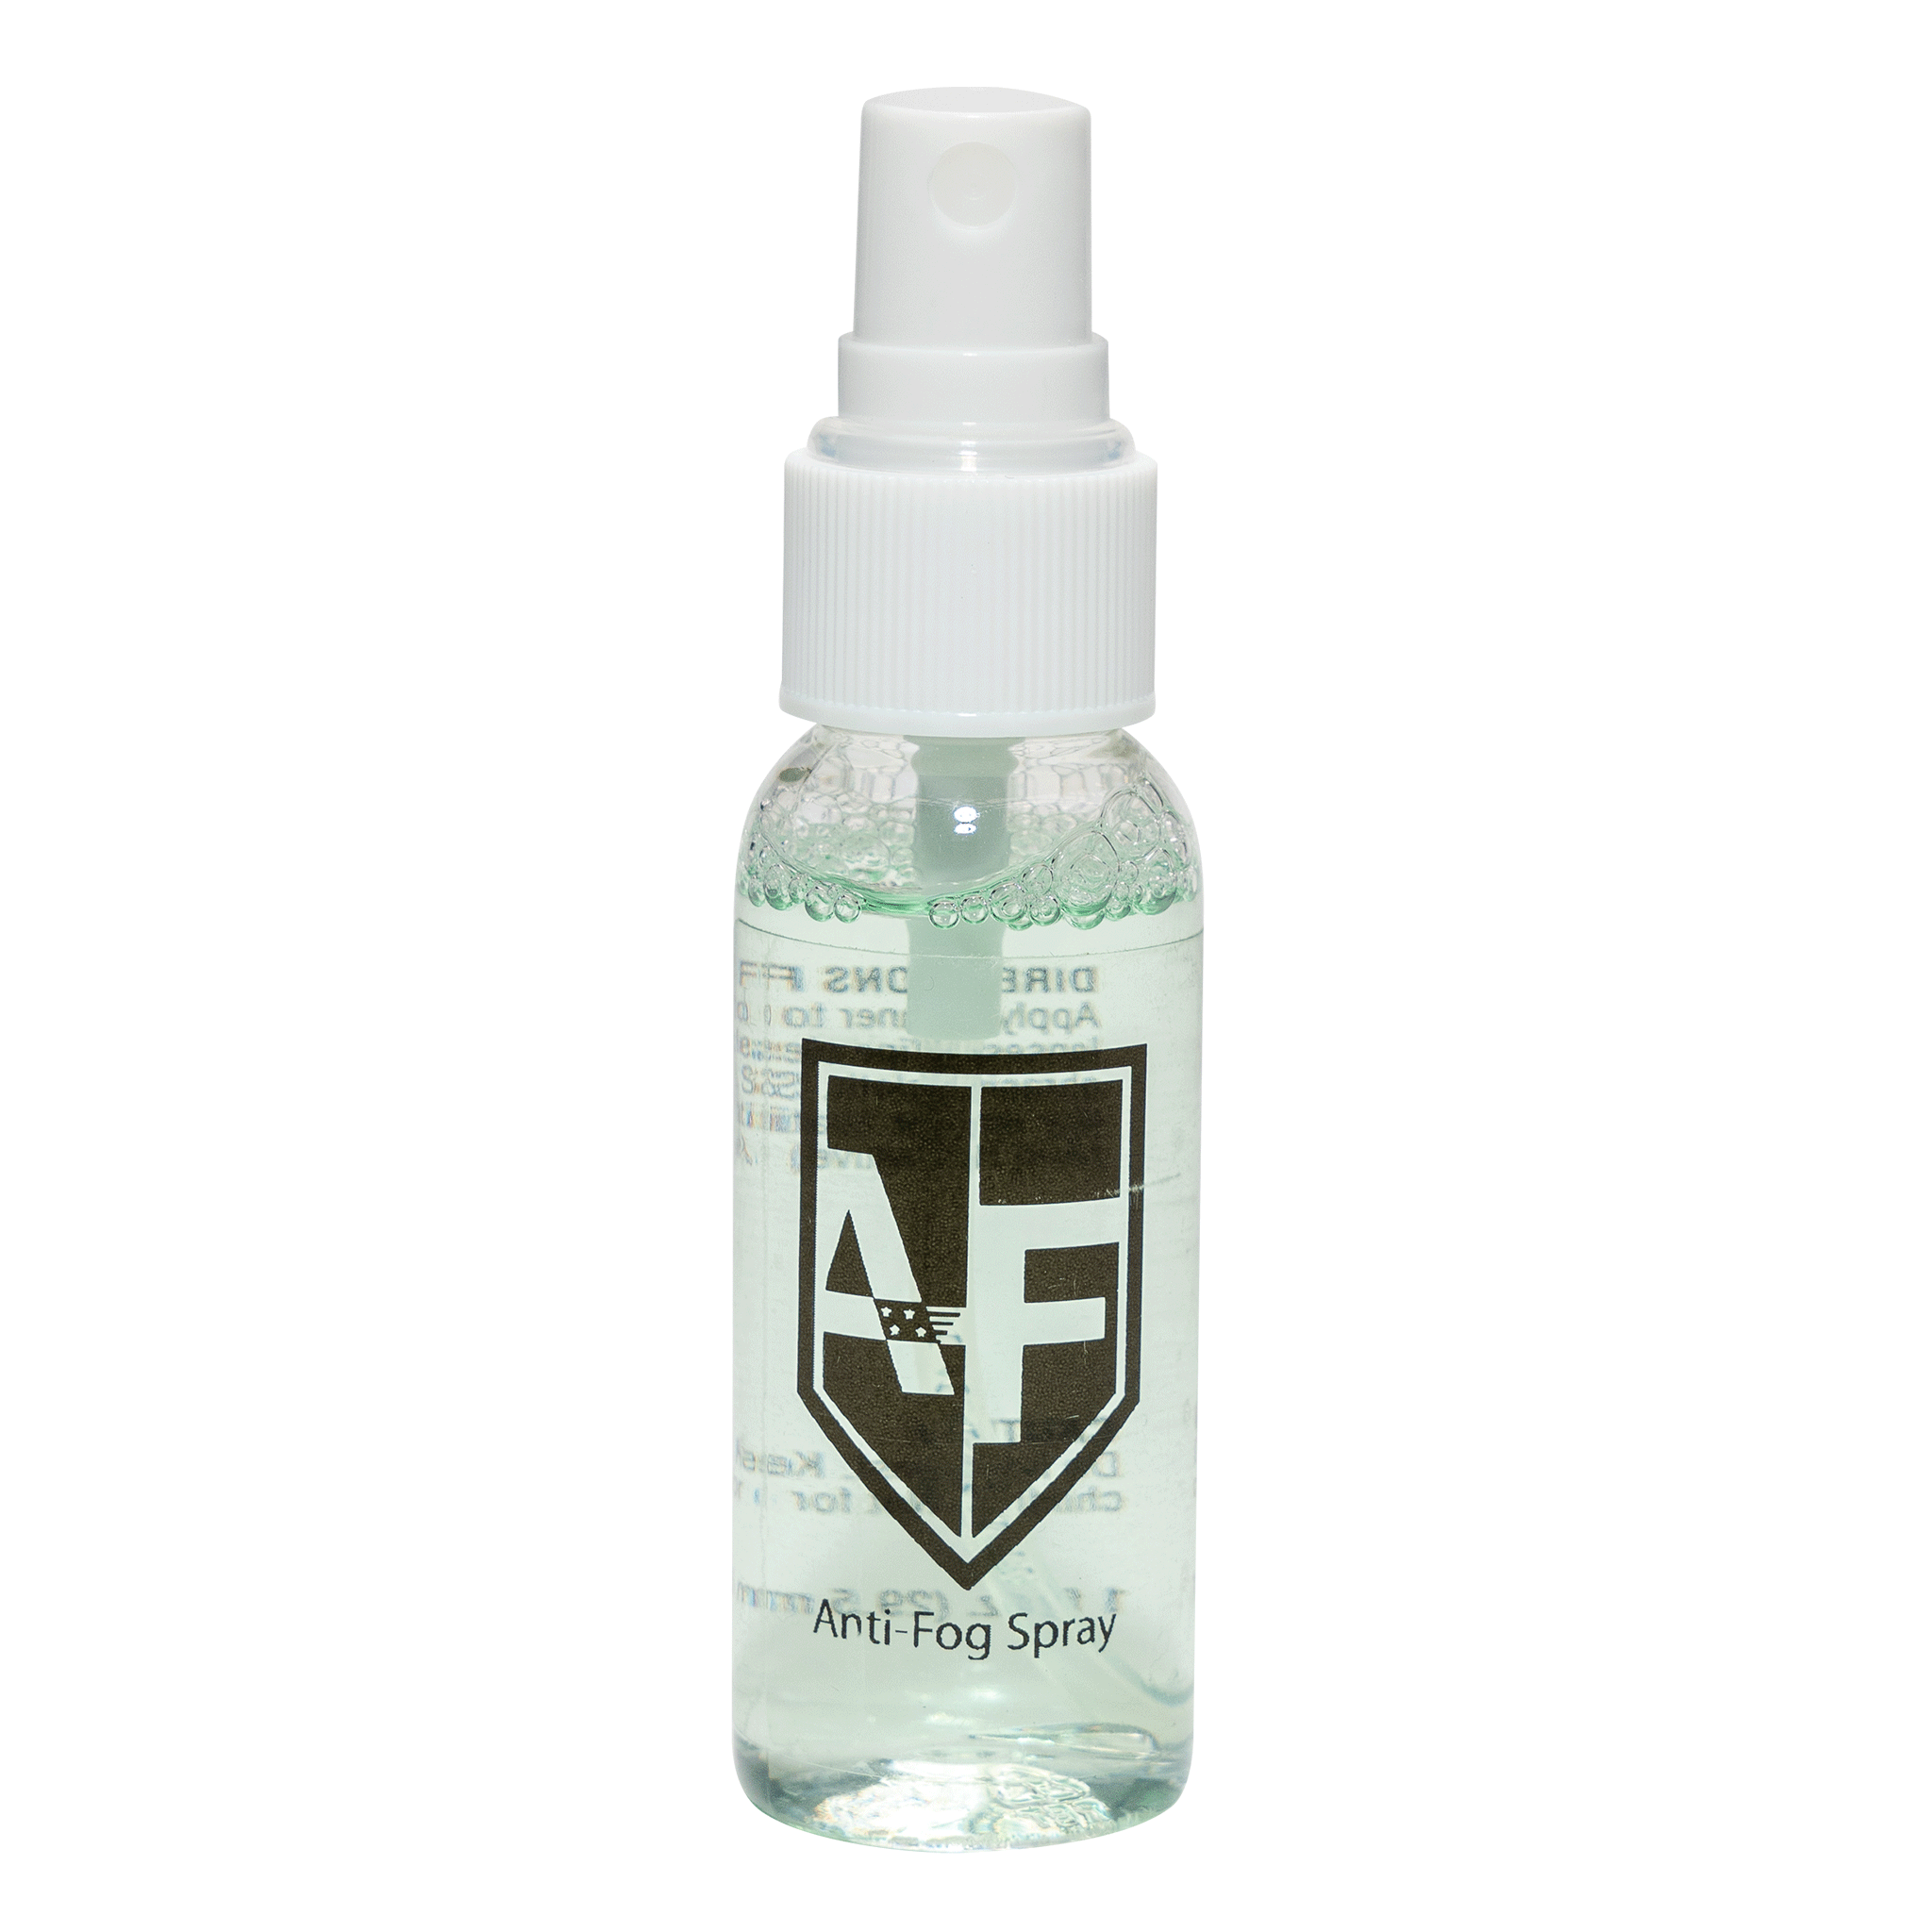 NEW NOLINKIT Anti Fog Spray – Premium Anti-Fog Spray. Free Shipping.